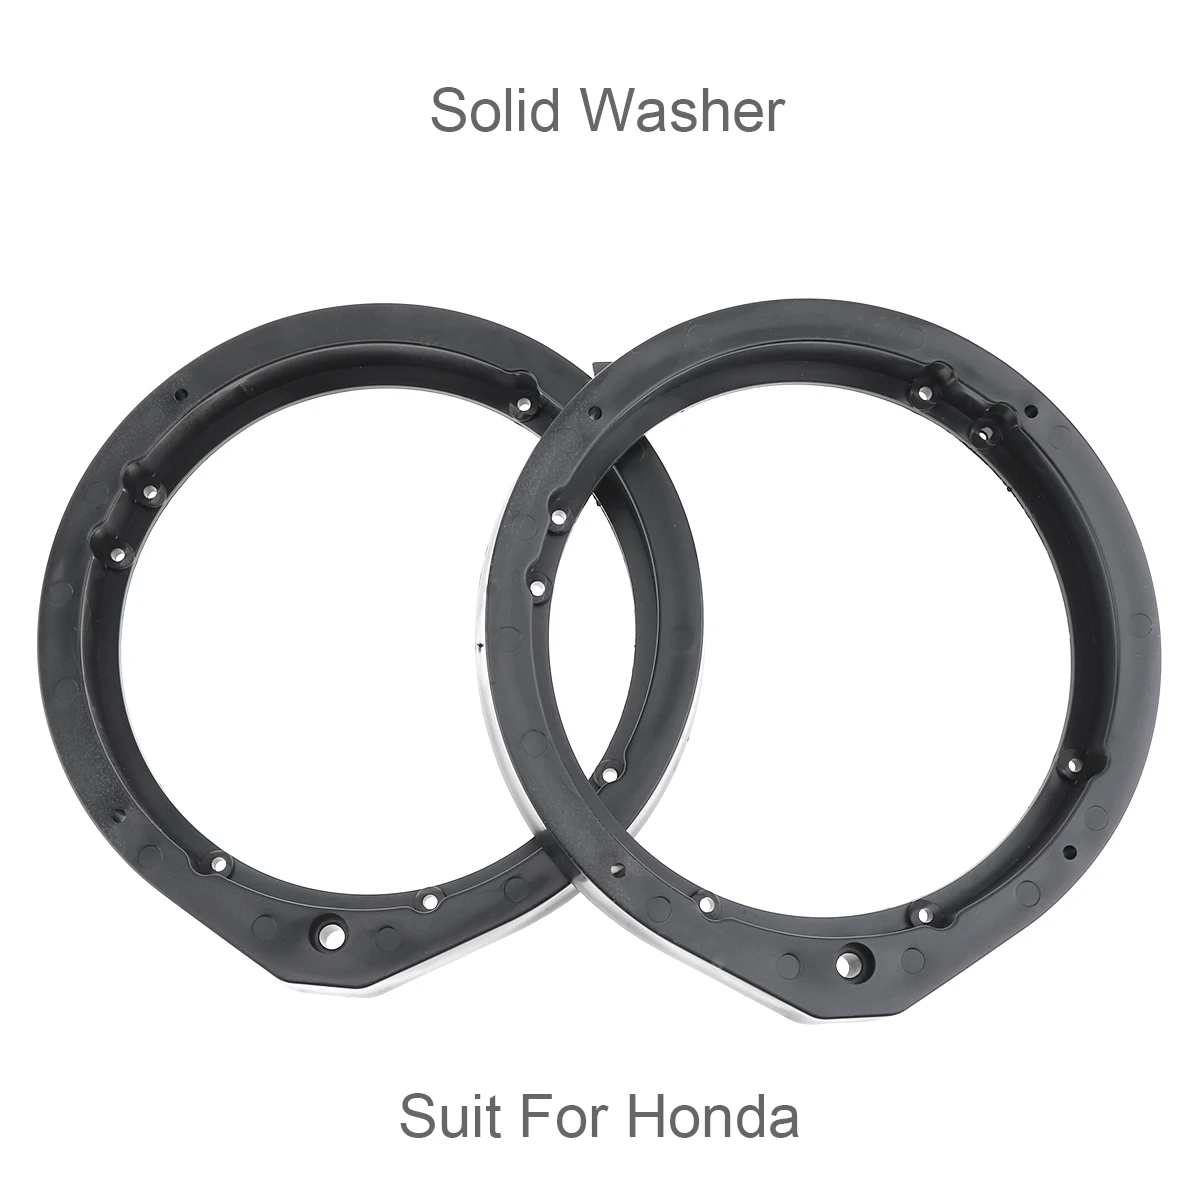 

2 Pcs Waterproof Solid Washer Adapters Brackets Speaker Mounts Plates Speaker Gasket For Honda 6.5 Inch Cars Vehicle Automobiles